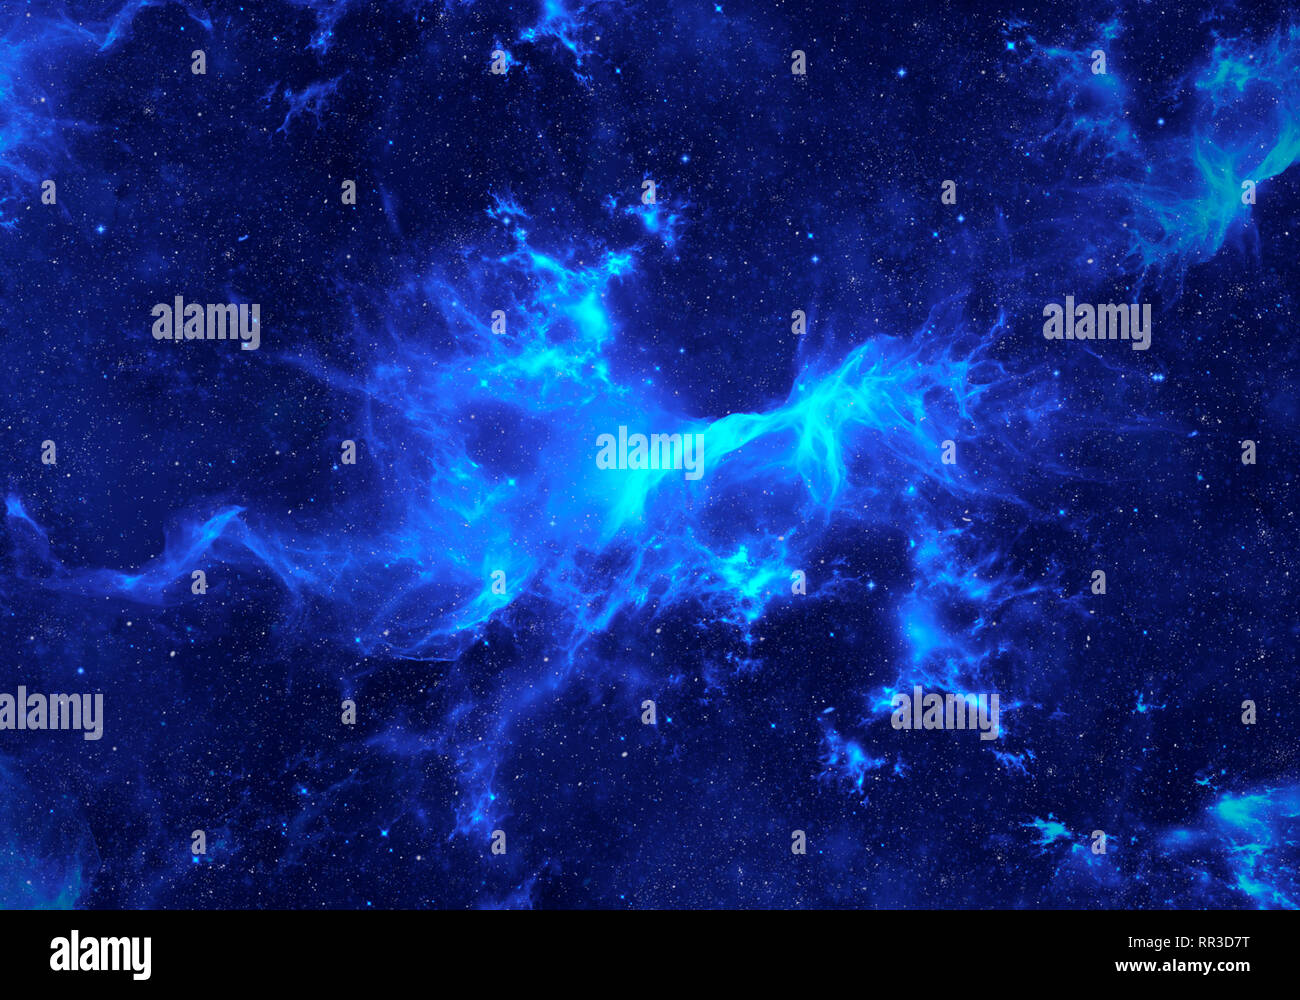 Nebula and stars in night sky. Space background. Stock Photo